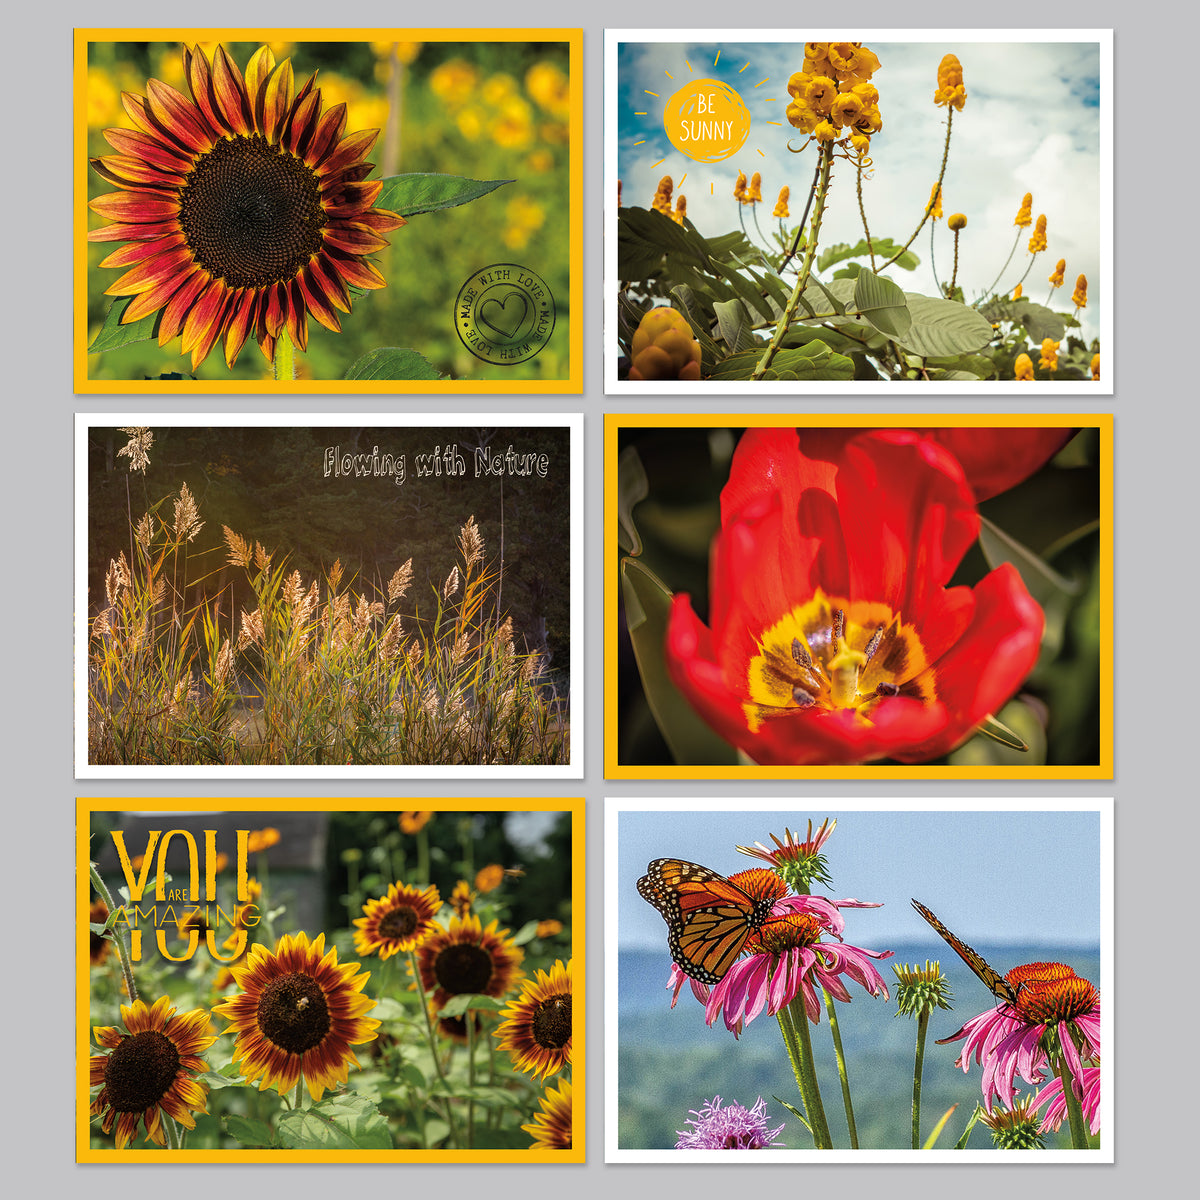 Flower, Love and Friendship Postcard Set - Thephotographybar